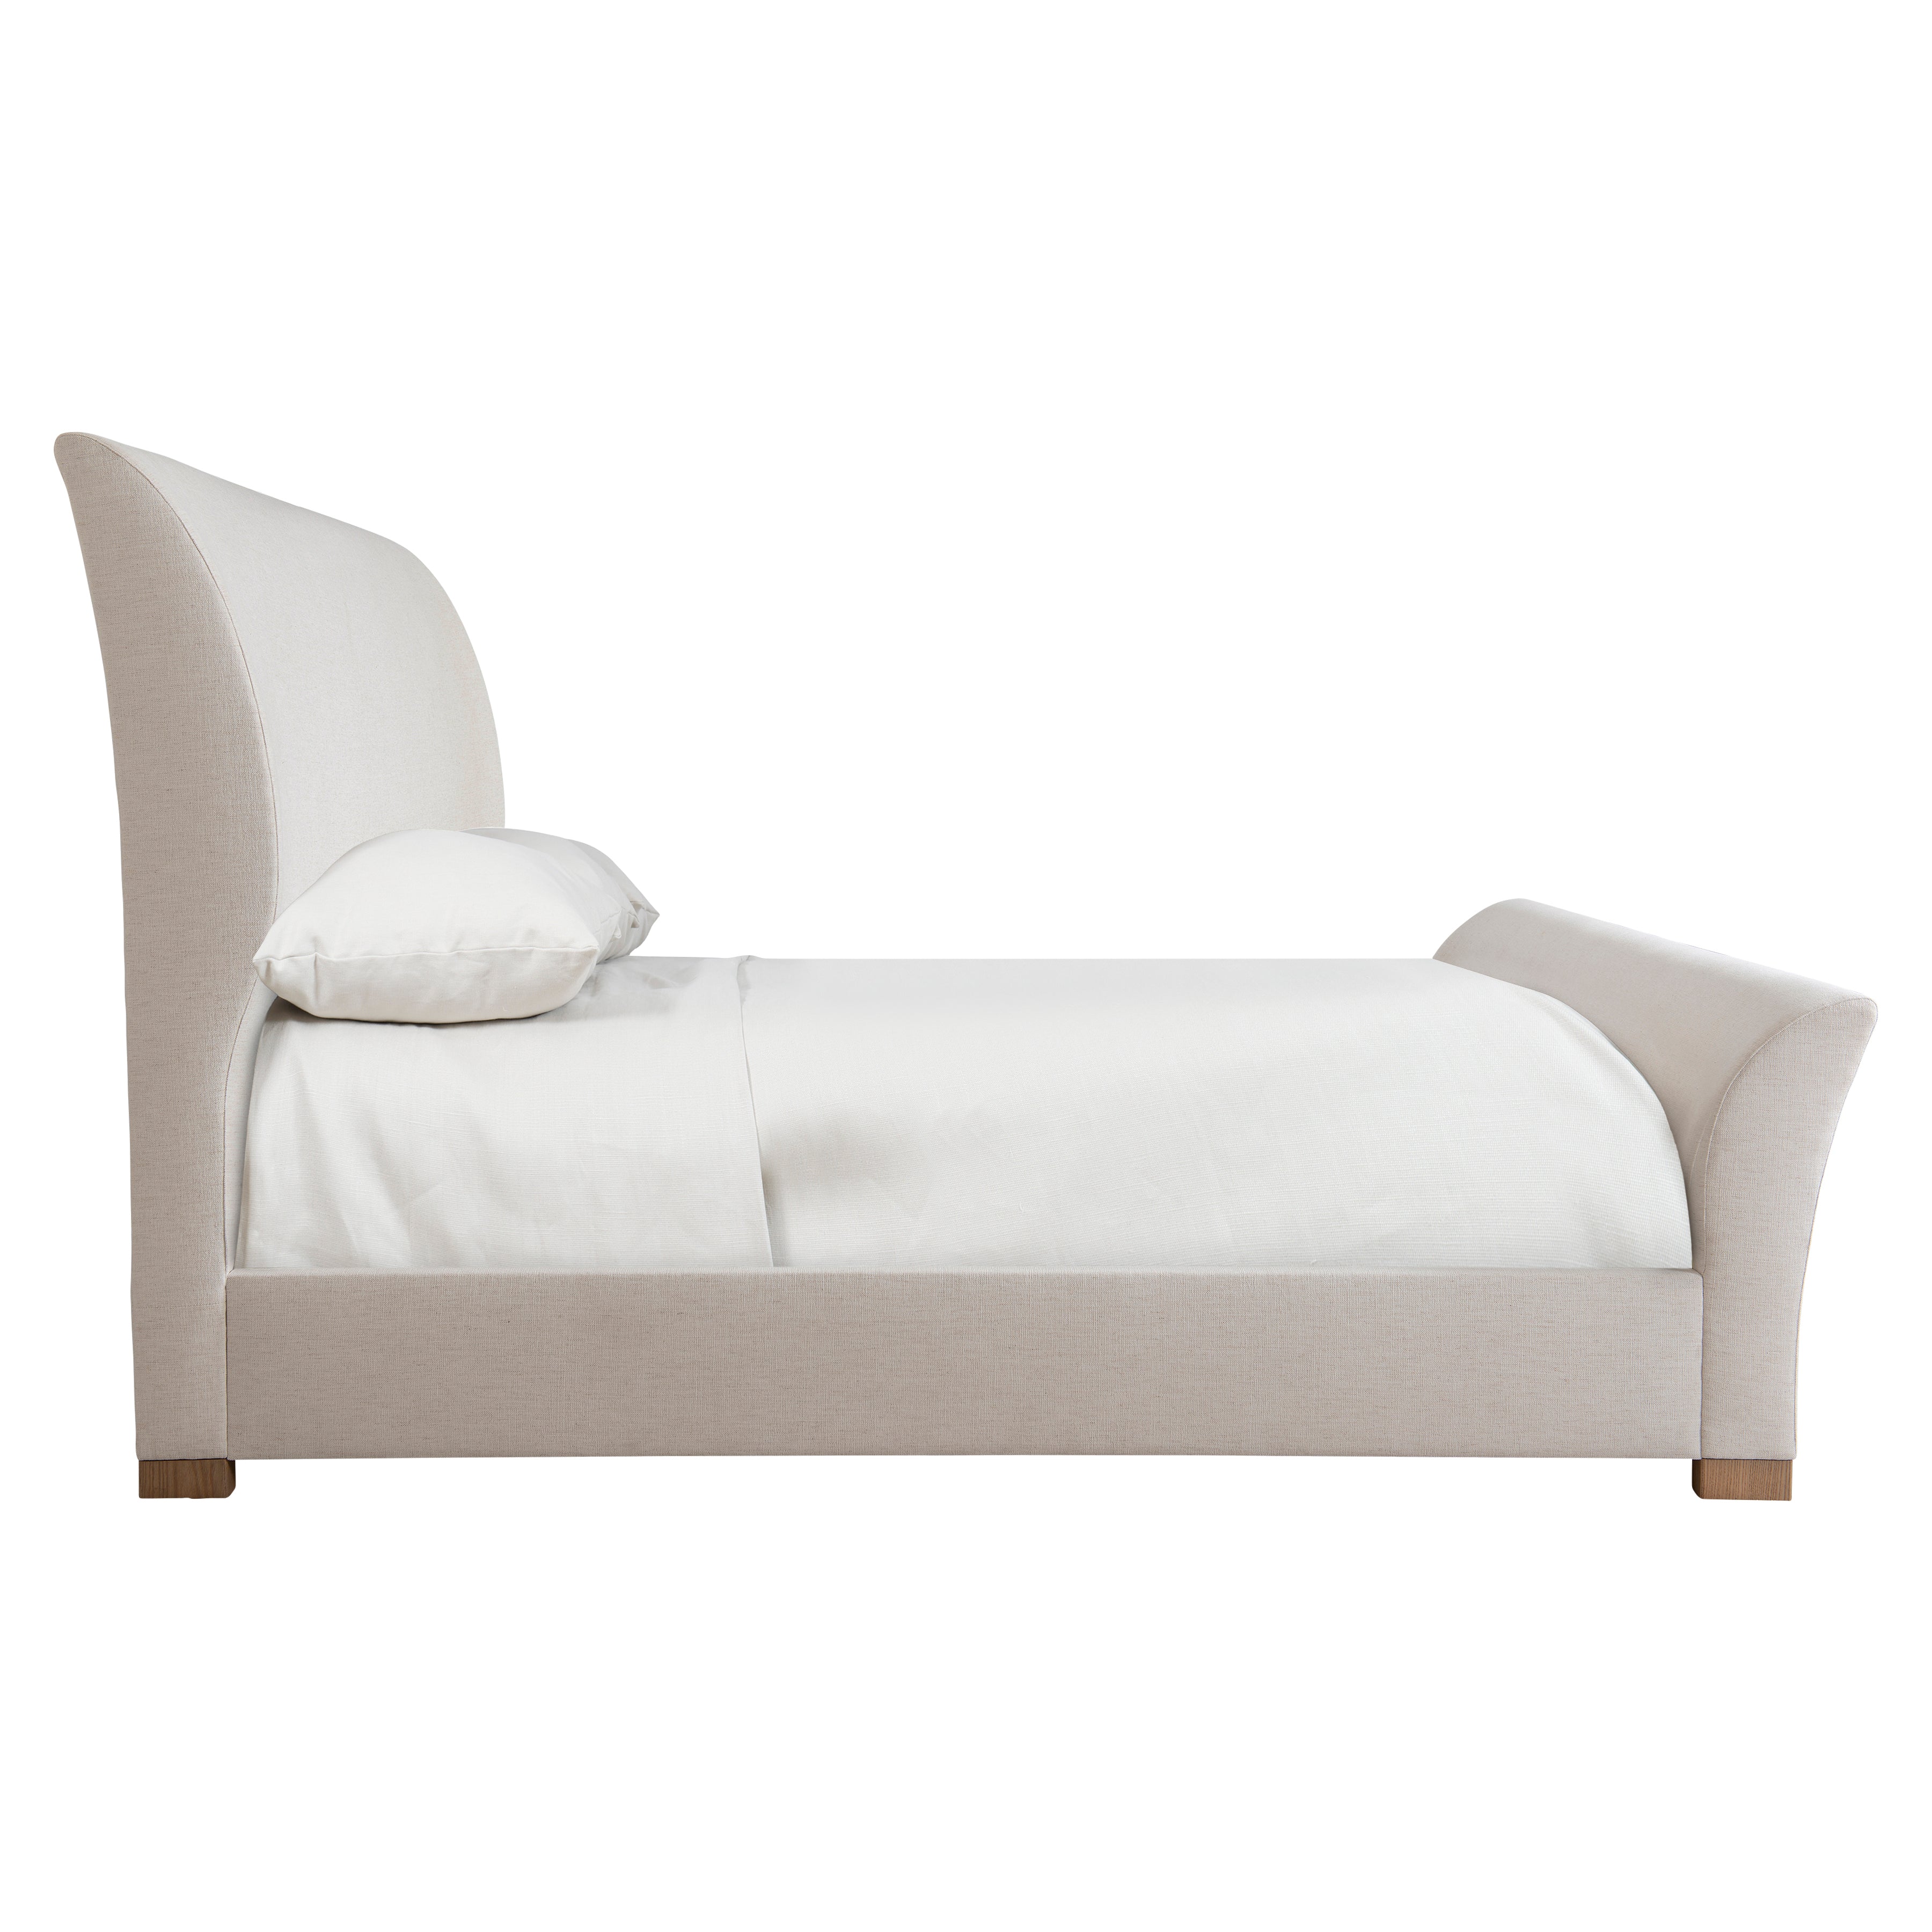 Modulum Upholstered Queen Sleigh Bed